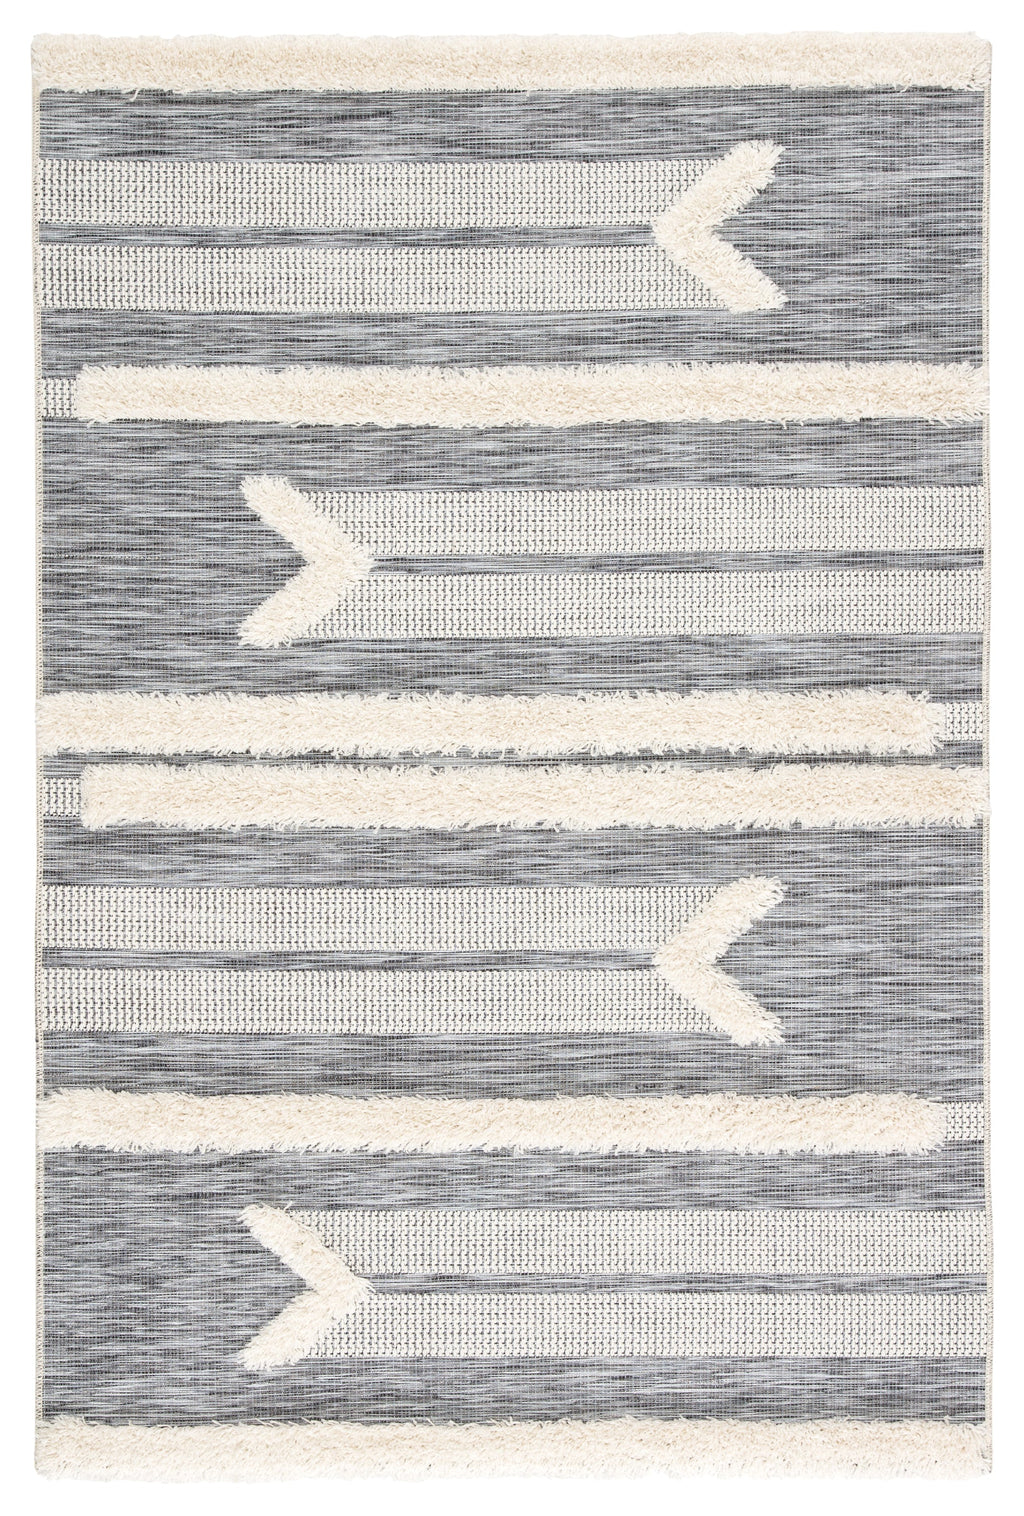 hanai indoor outdoor tribal gray cream rug design by jaipur 1